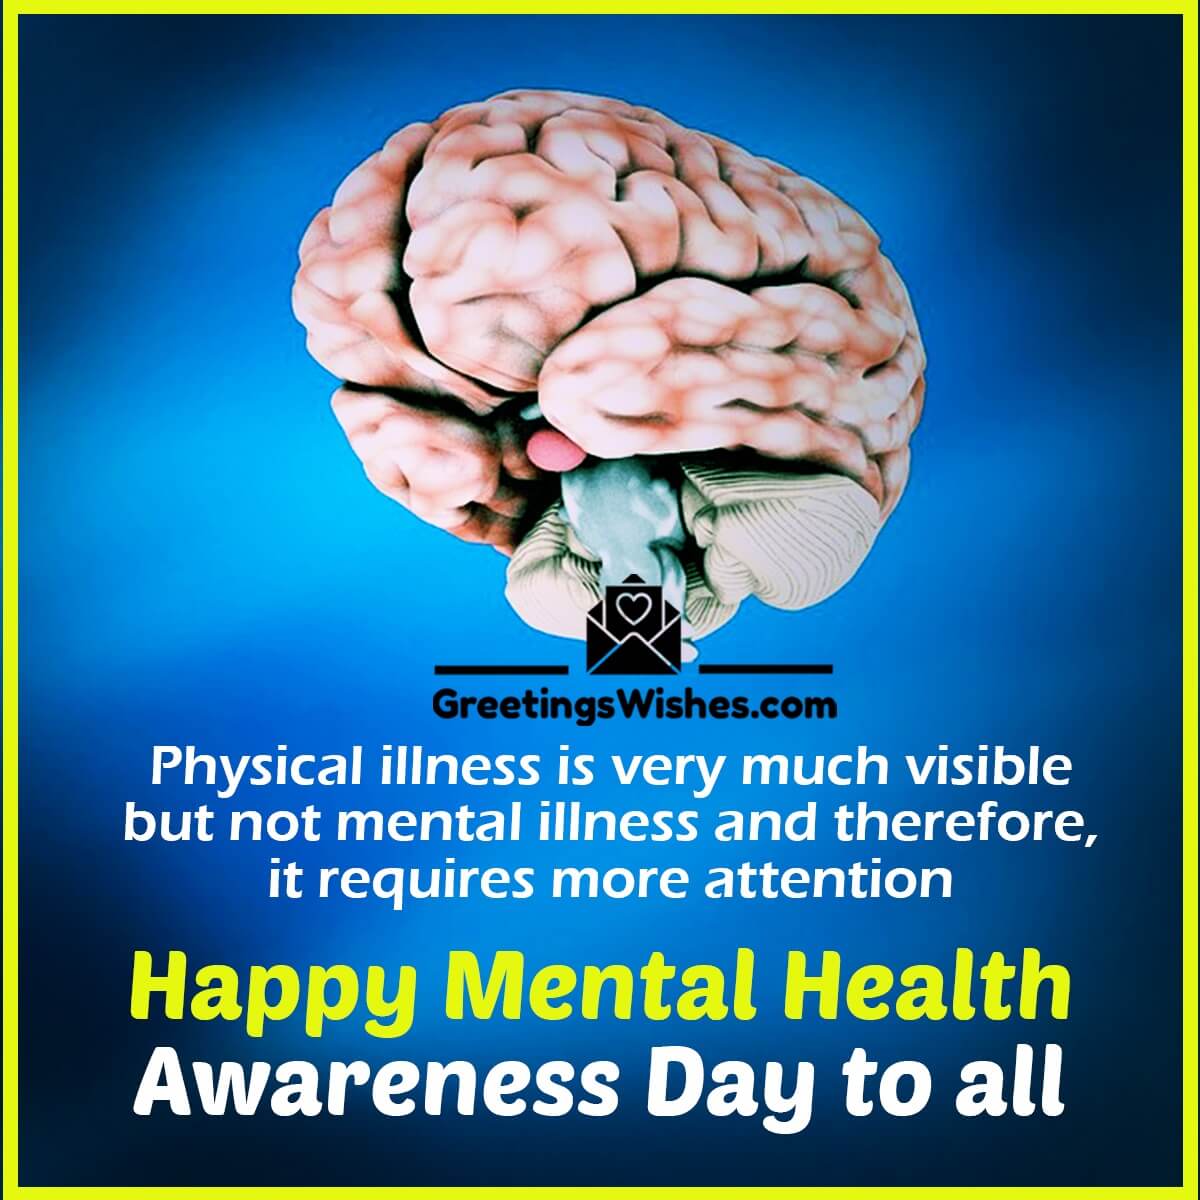 Happy Mental Health Awareness Day